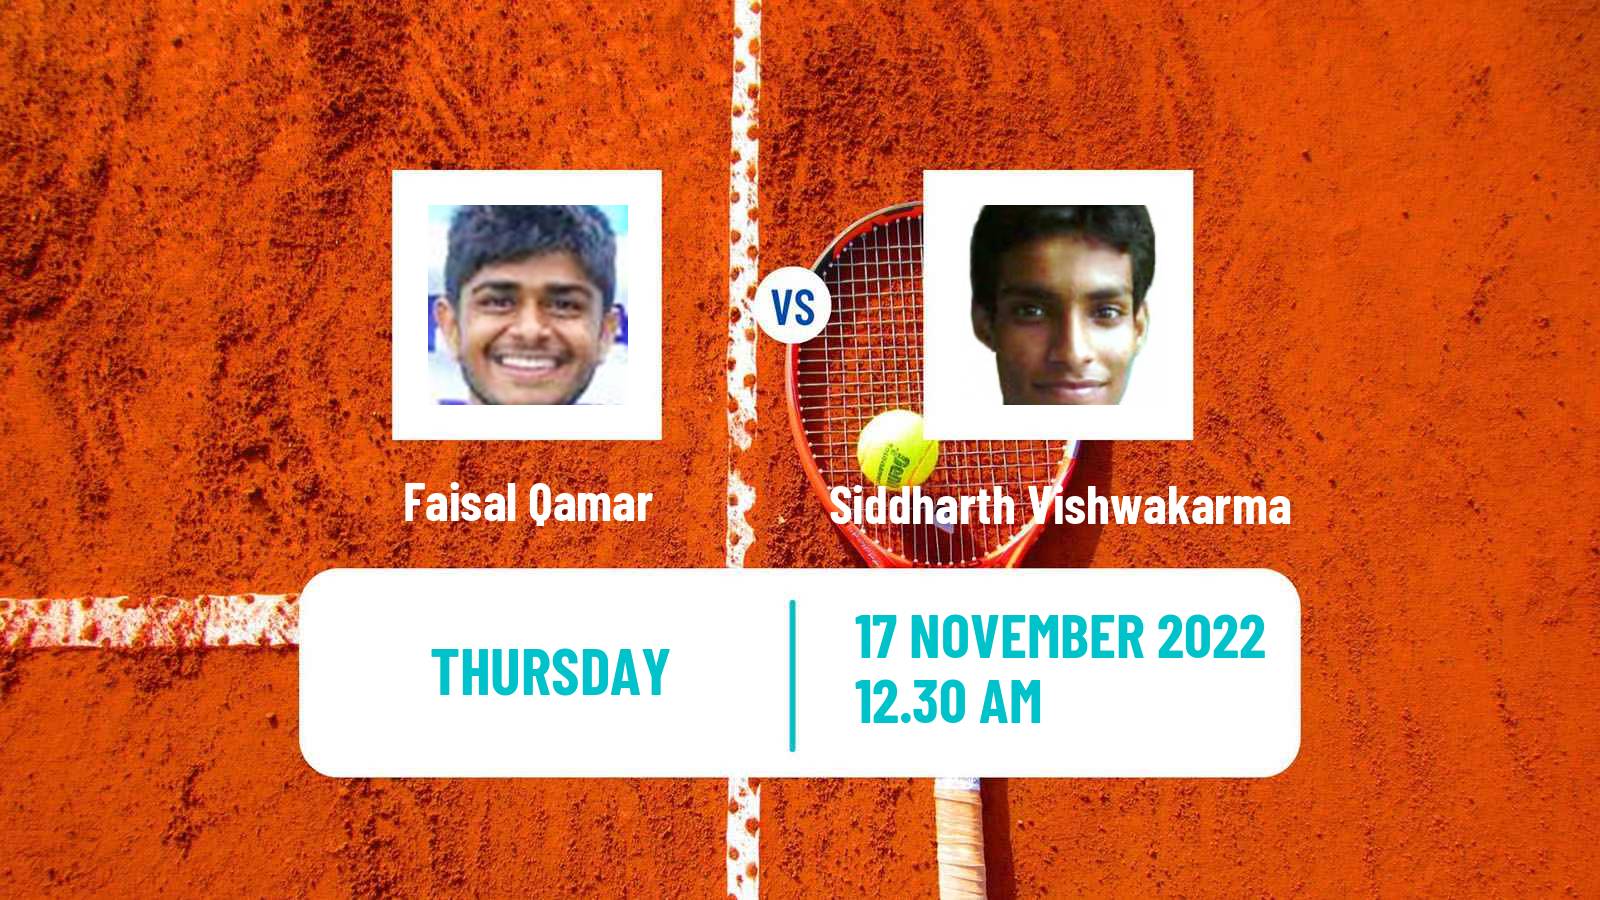 Tennis ITF Tournaments Faisal Qamar - Siddharth Vishwakarma